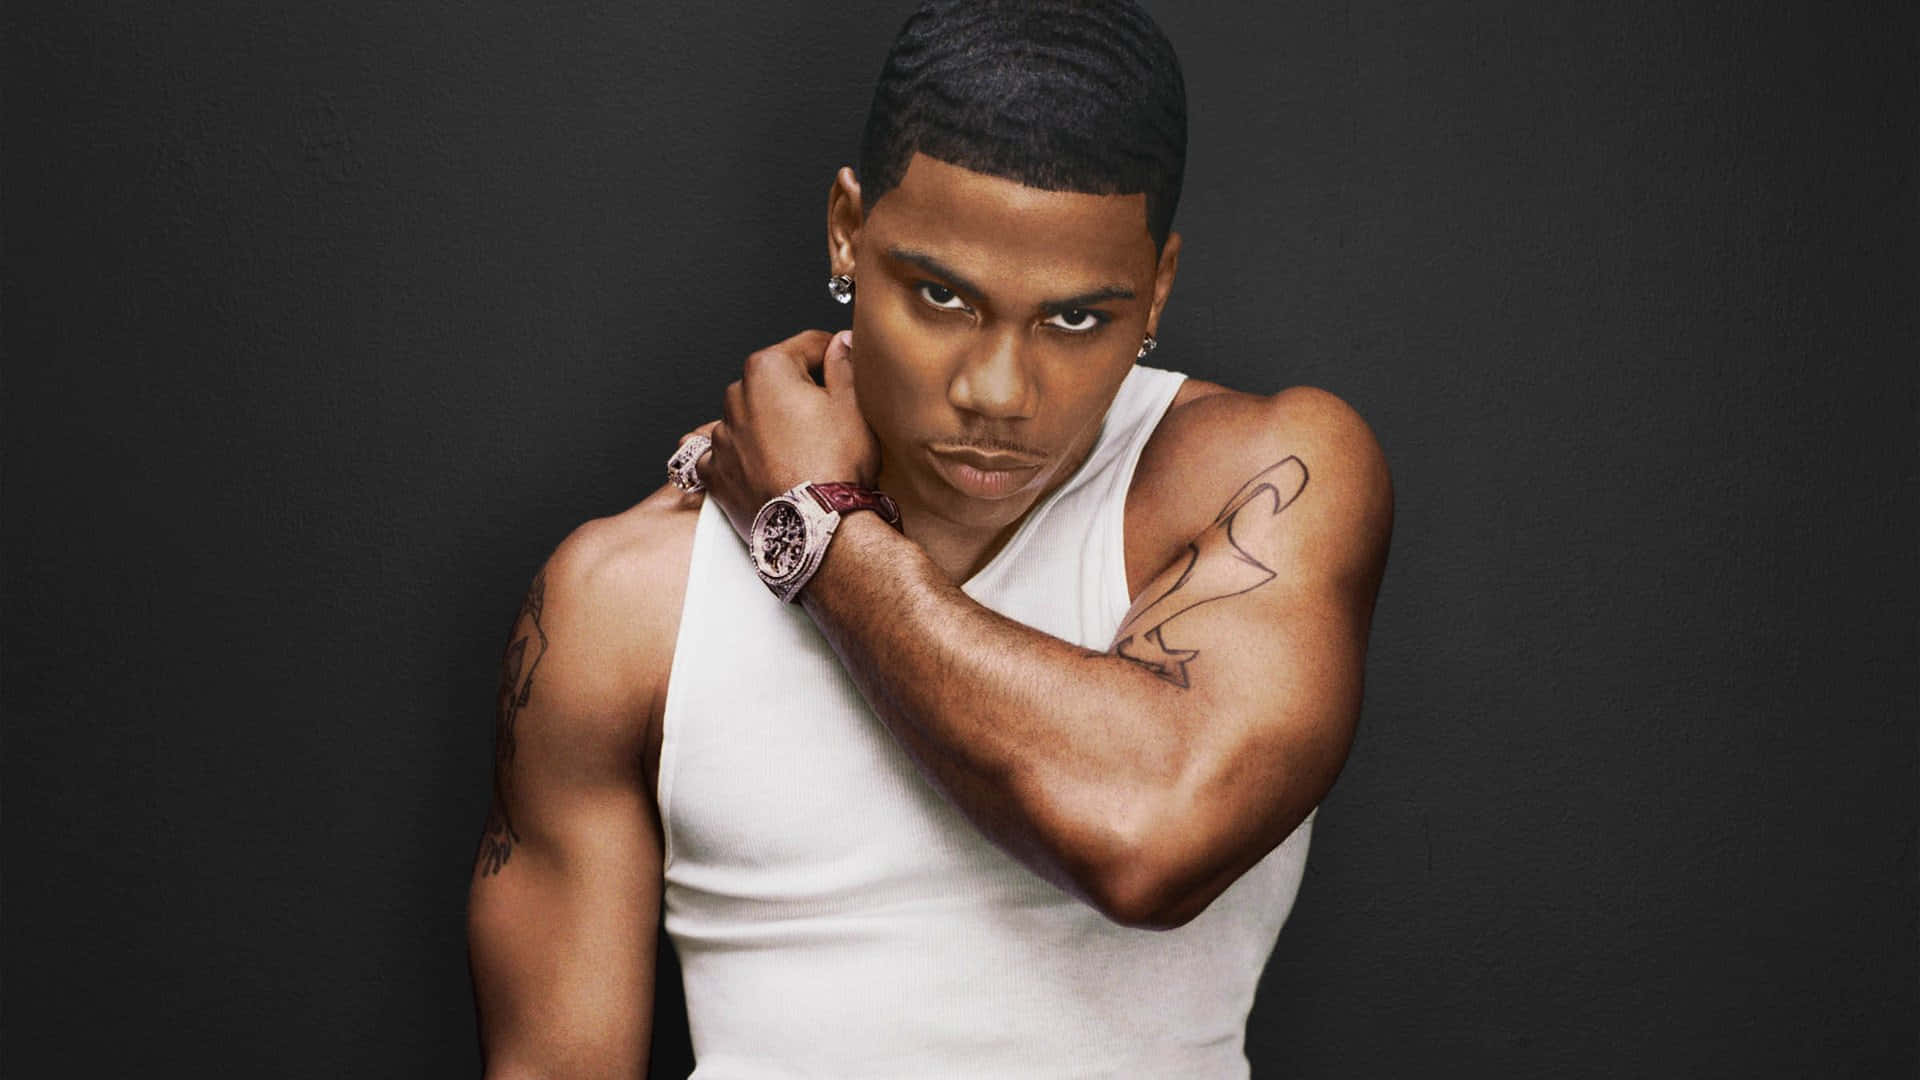 Nellypräsentiert Seine Berühmten 